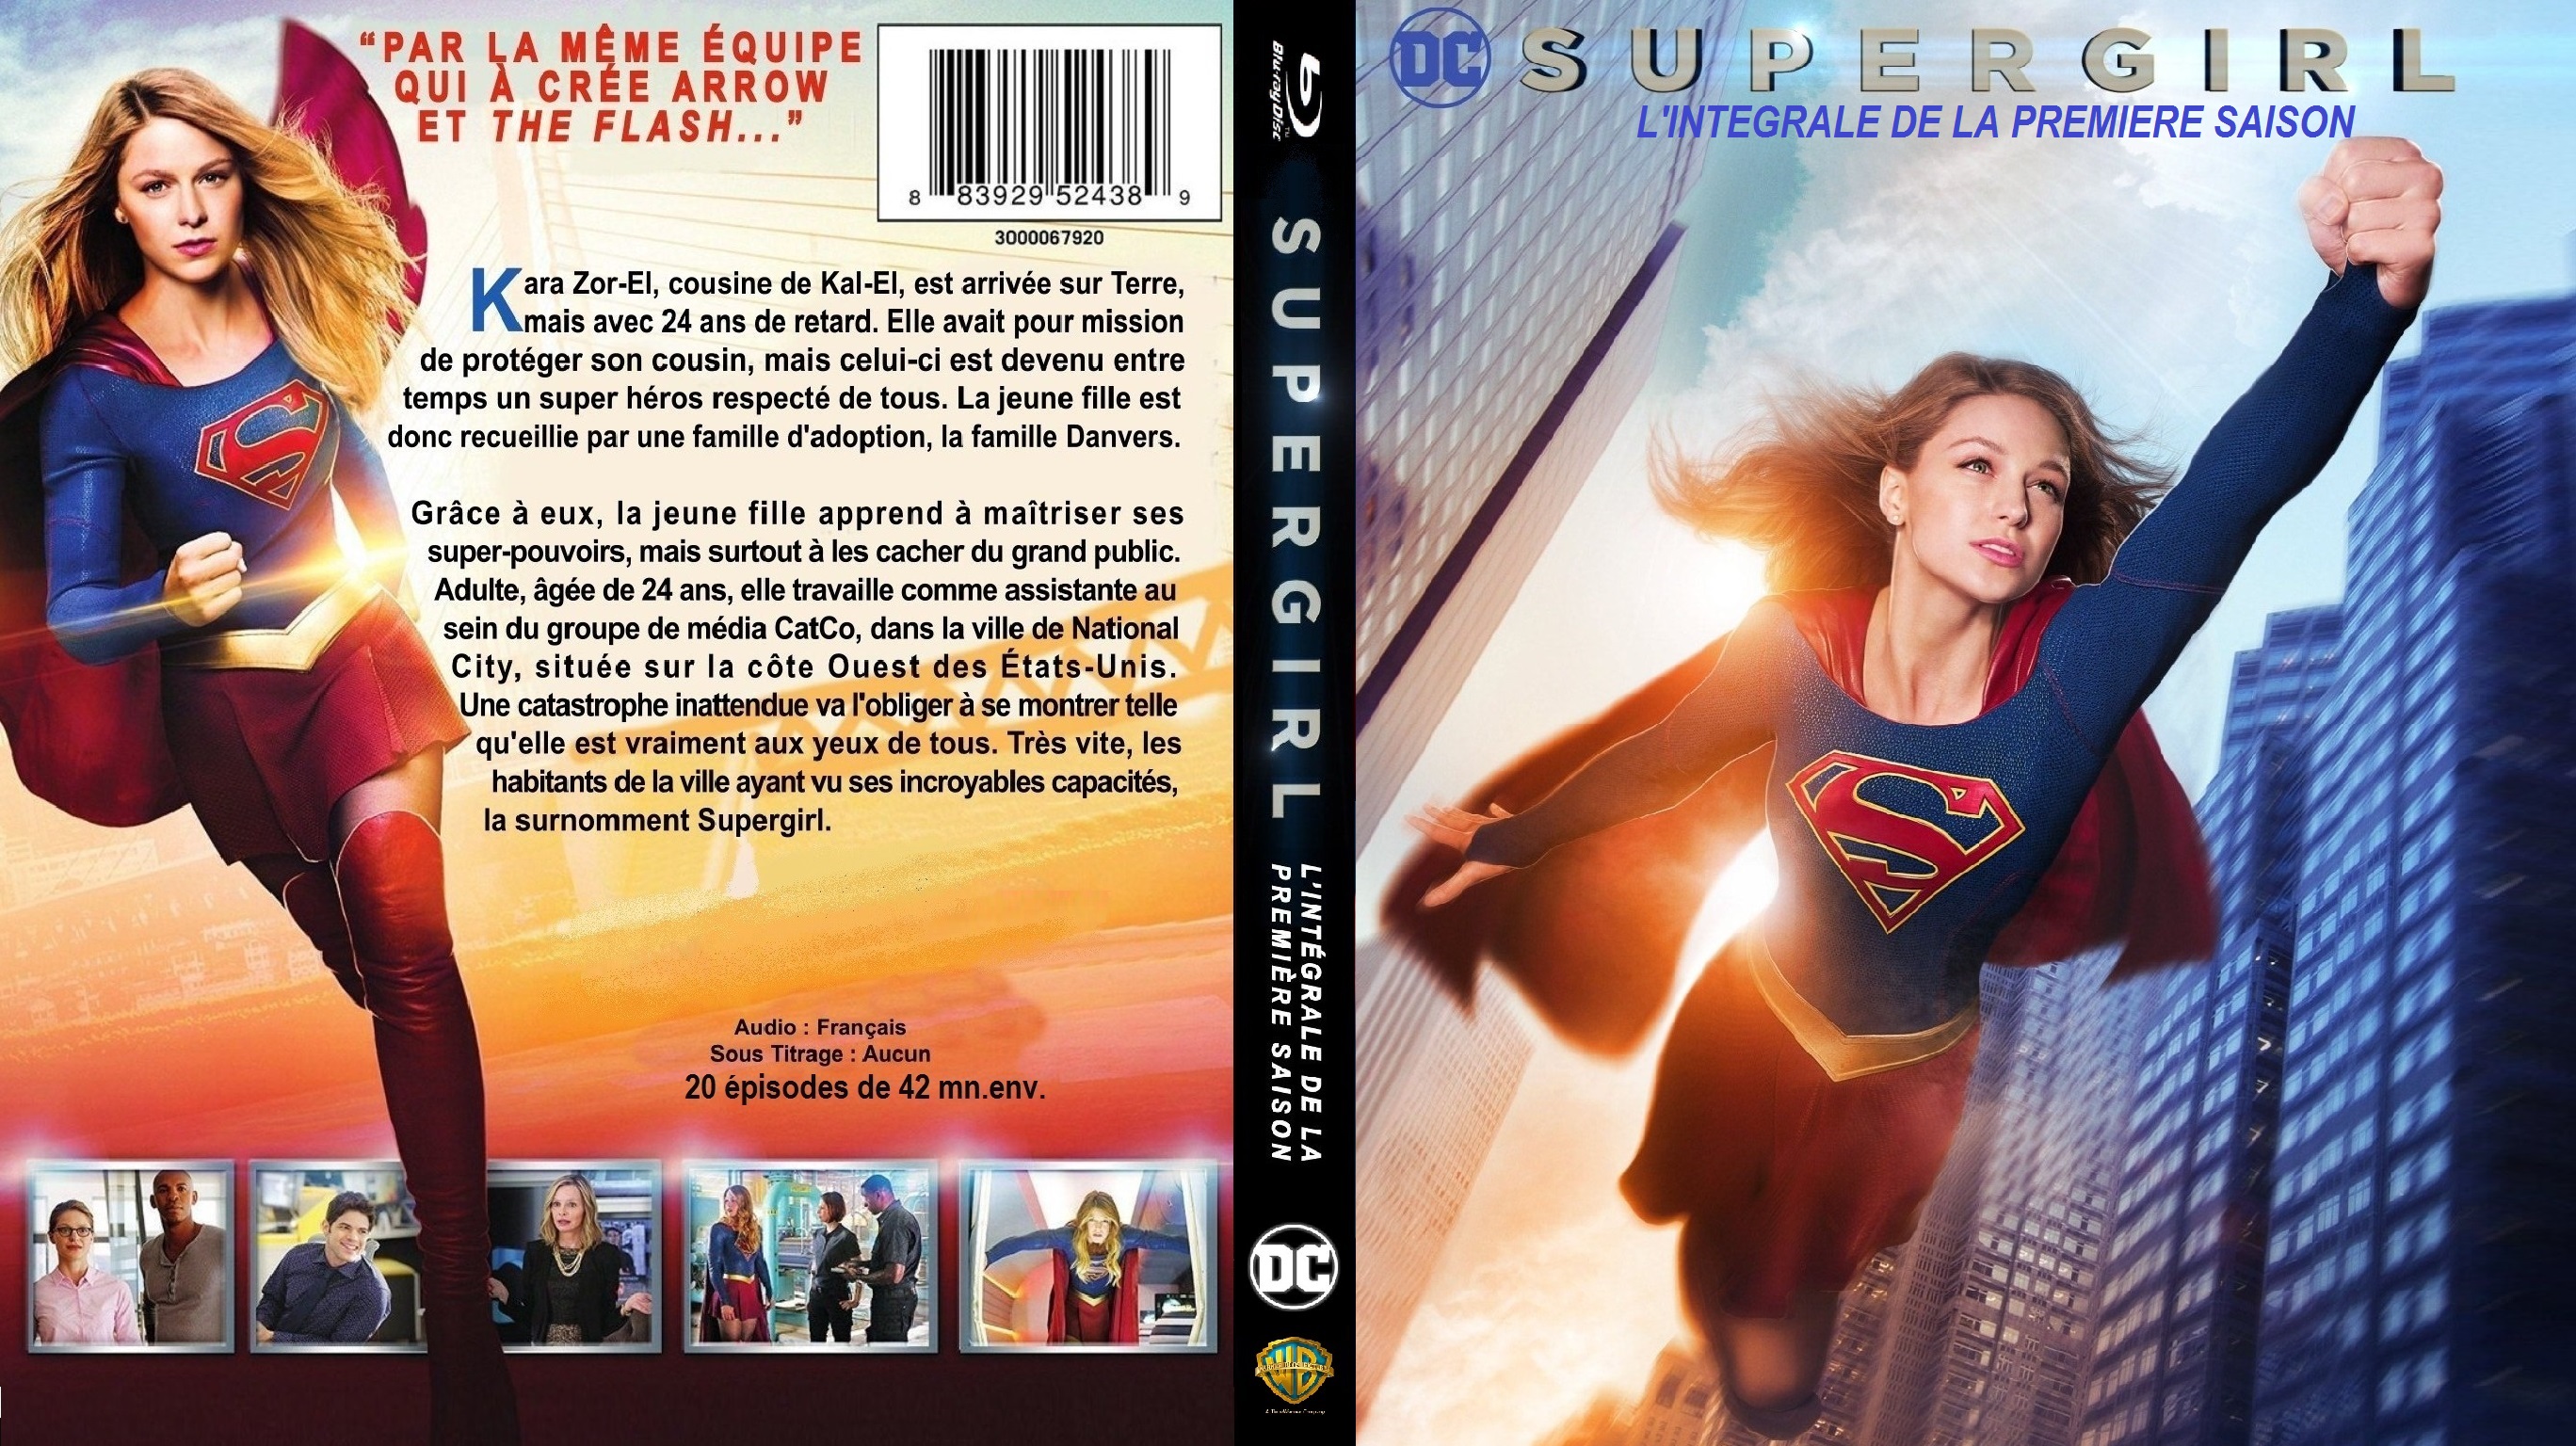 Jaquette DVD Supergirl saison 1 custom (BLU-RAY) v2